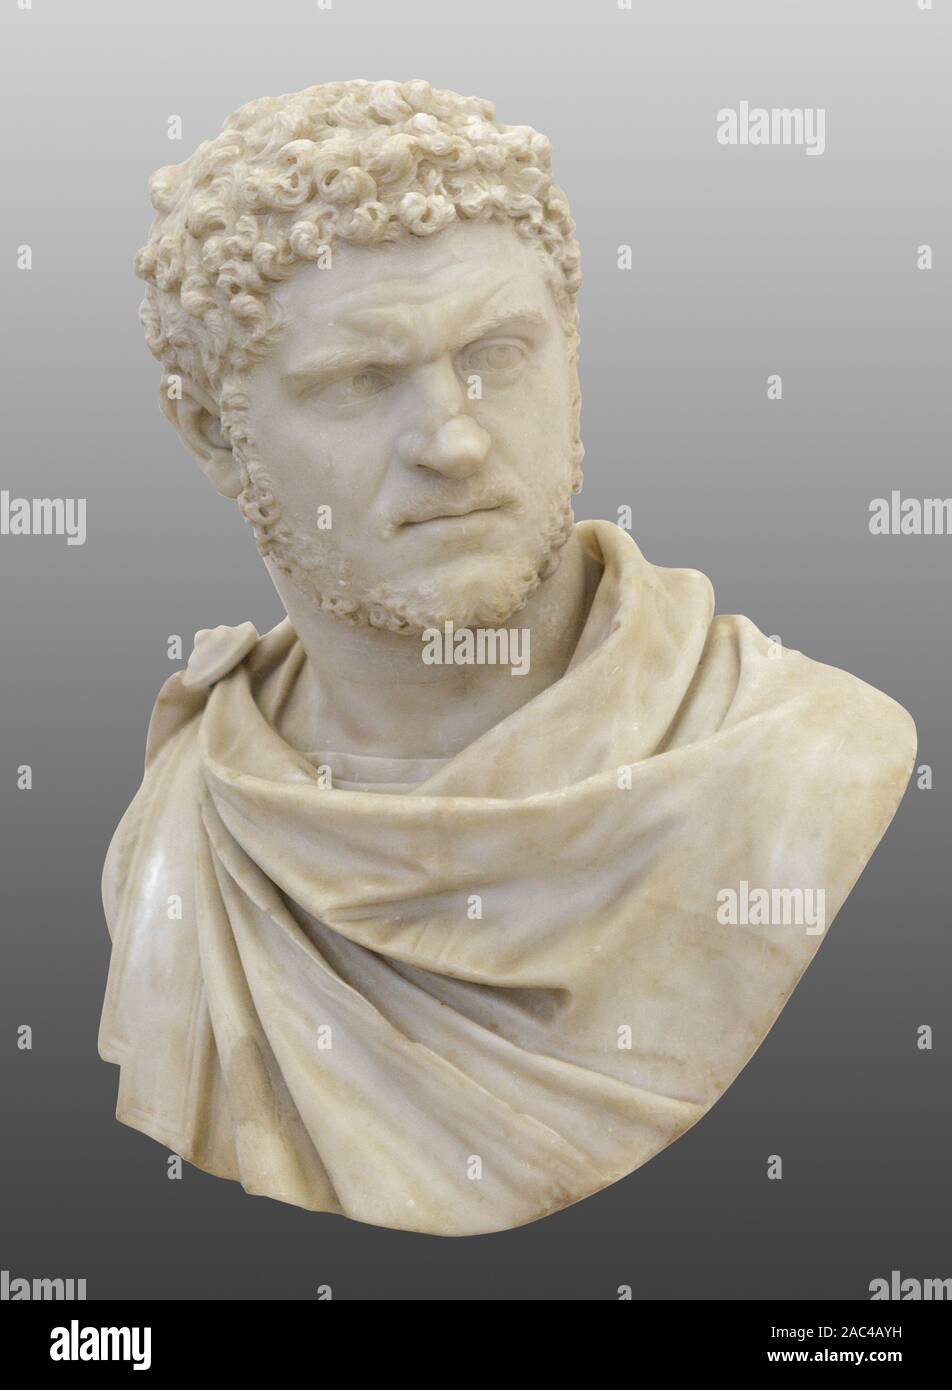 Head of Caracalla. (Marcus Aurelius Severus Antoninus Augustus) known as Antoninus. Roman emperor. Isolated with clipping path Stock Photo